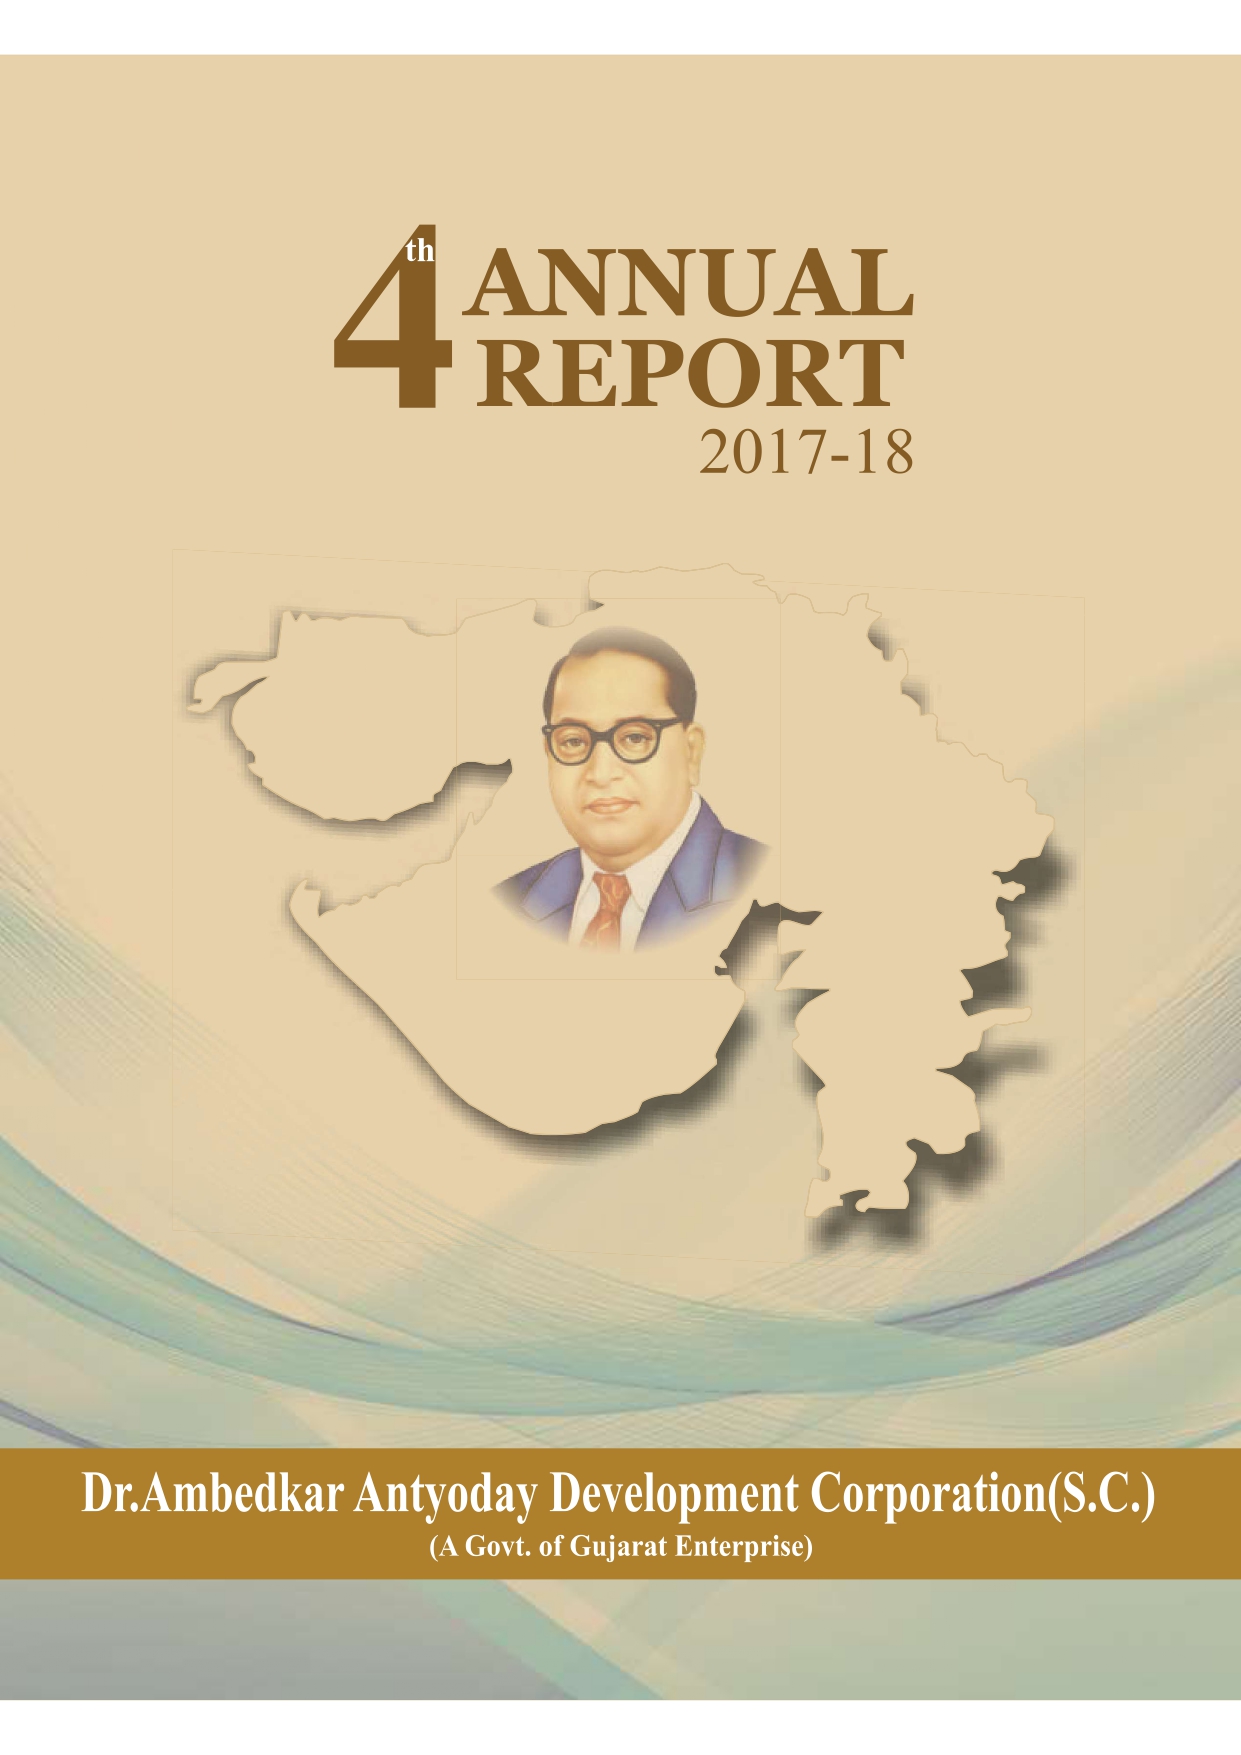 Annual report-2017-18 